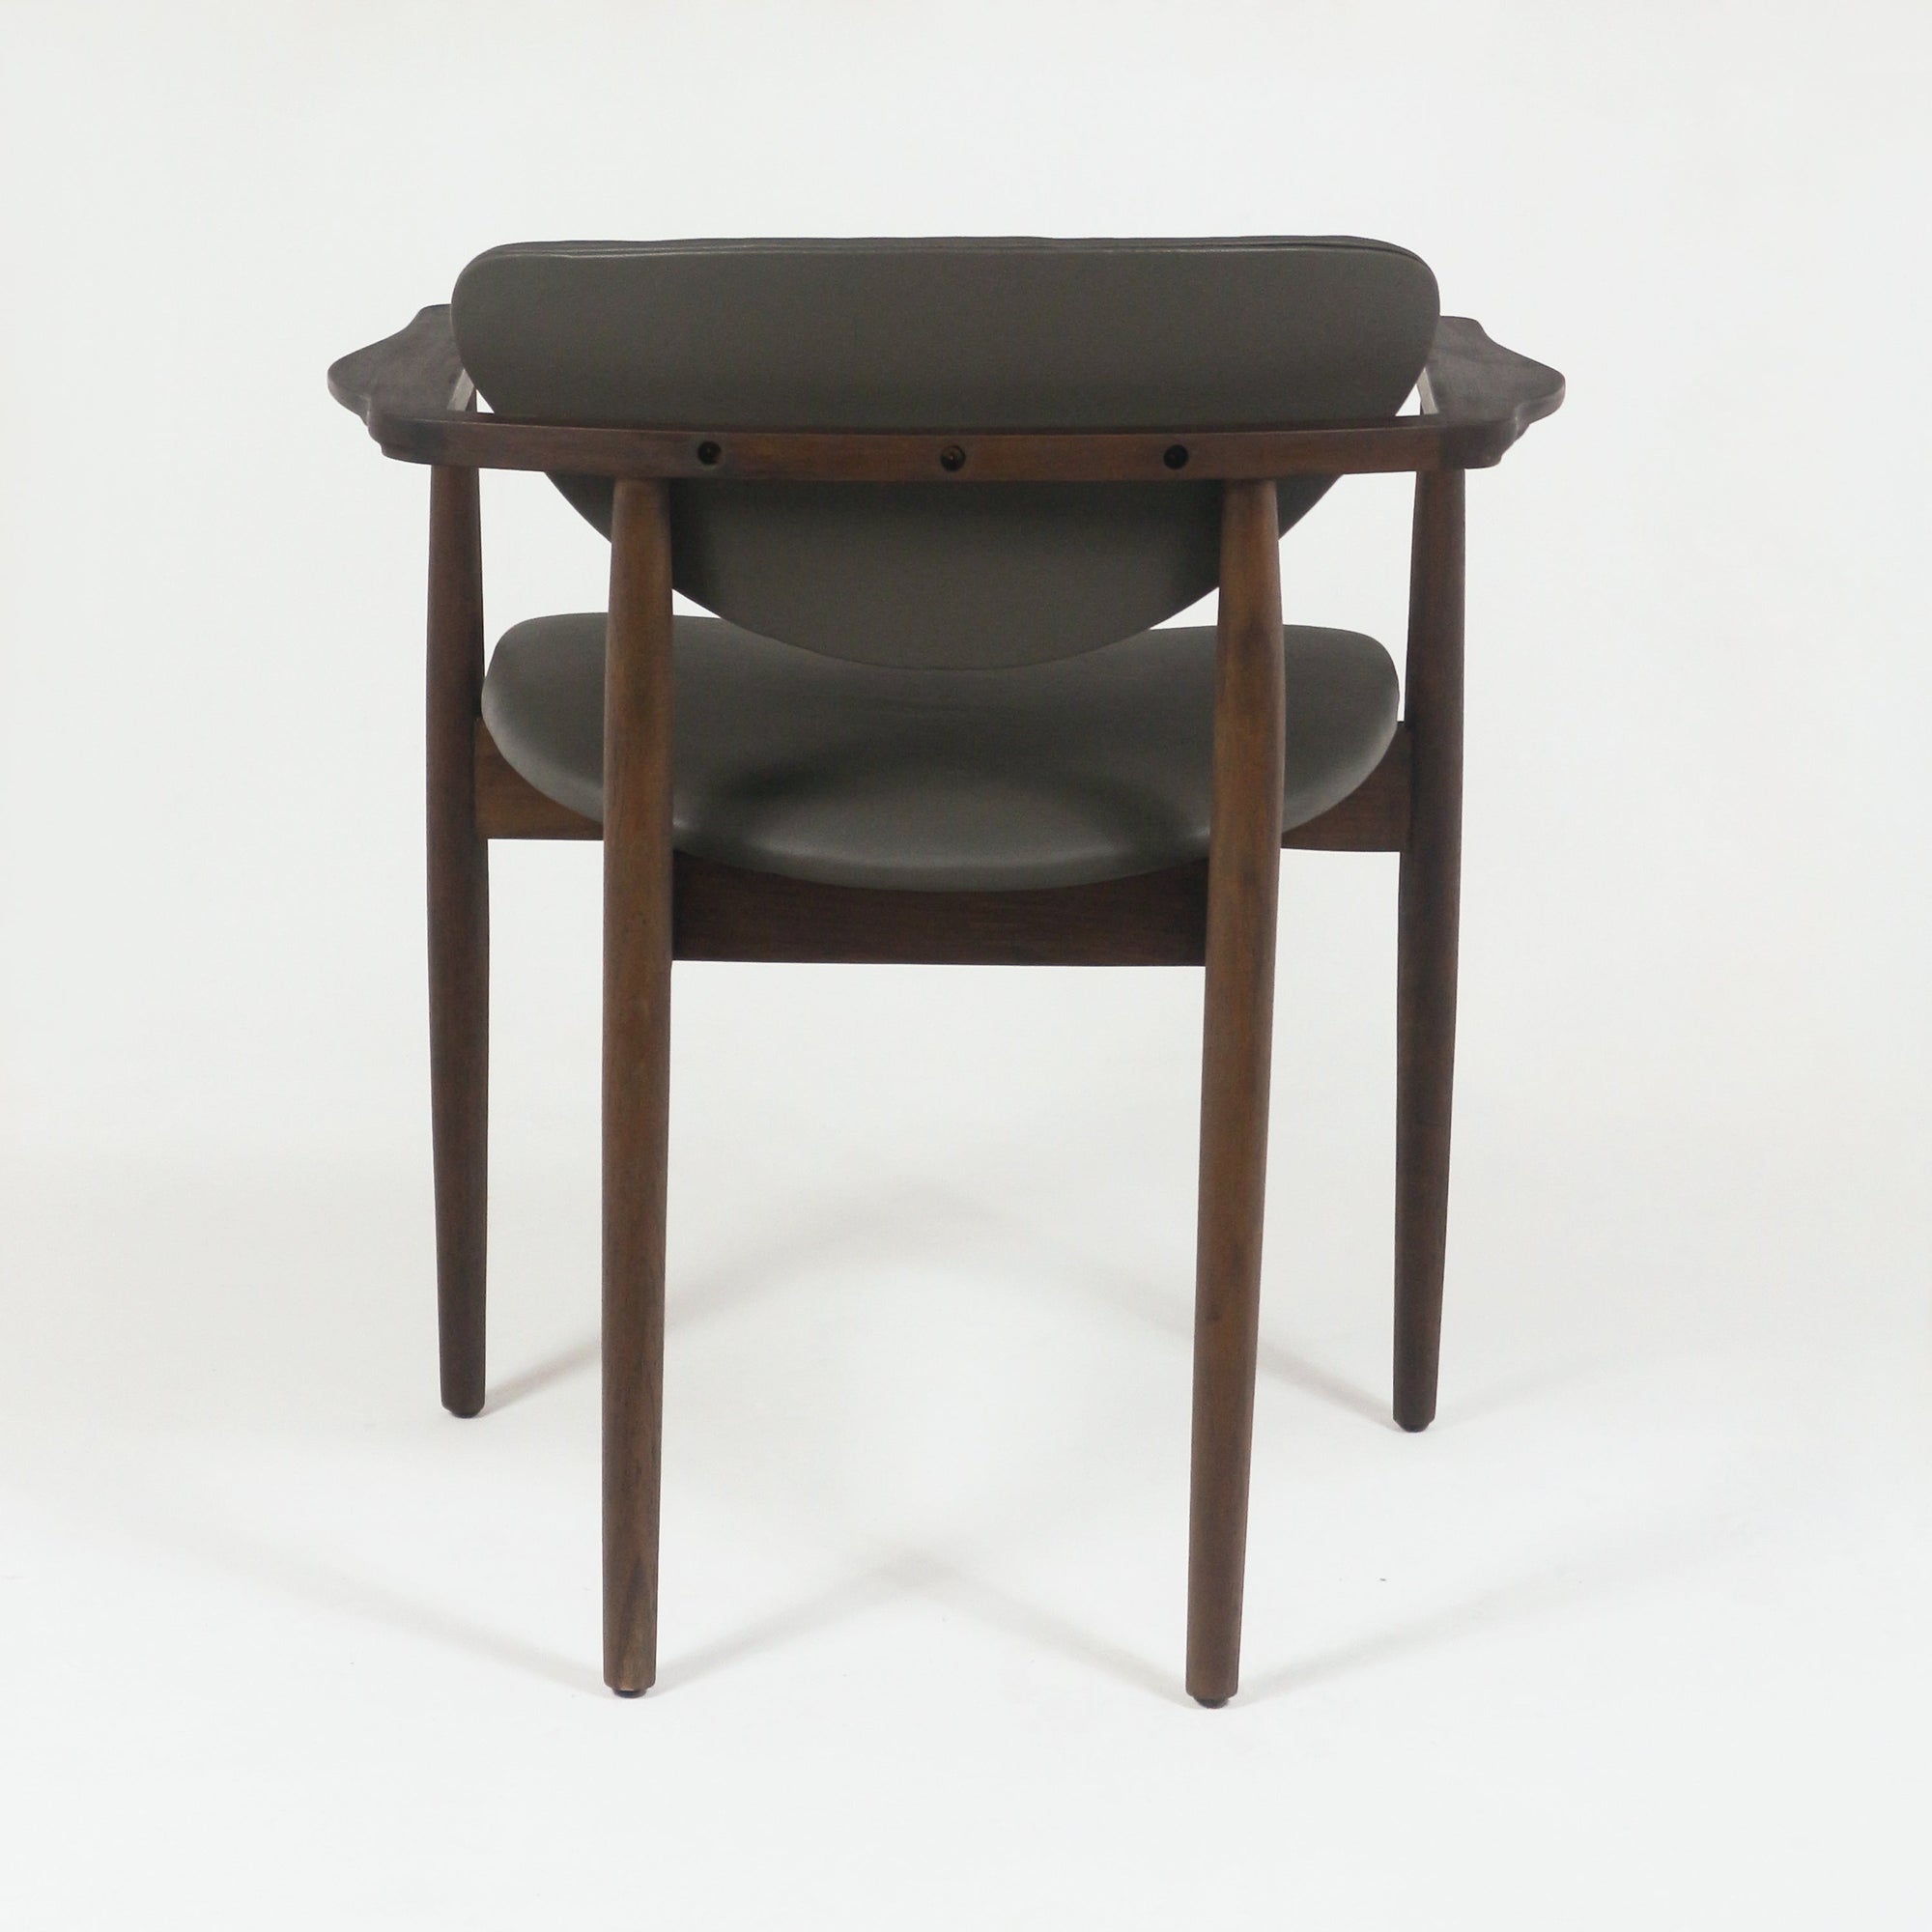 Eugene Teak & Leather Dining Chair - INTERIORTONIC